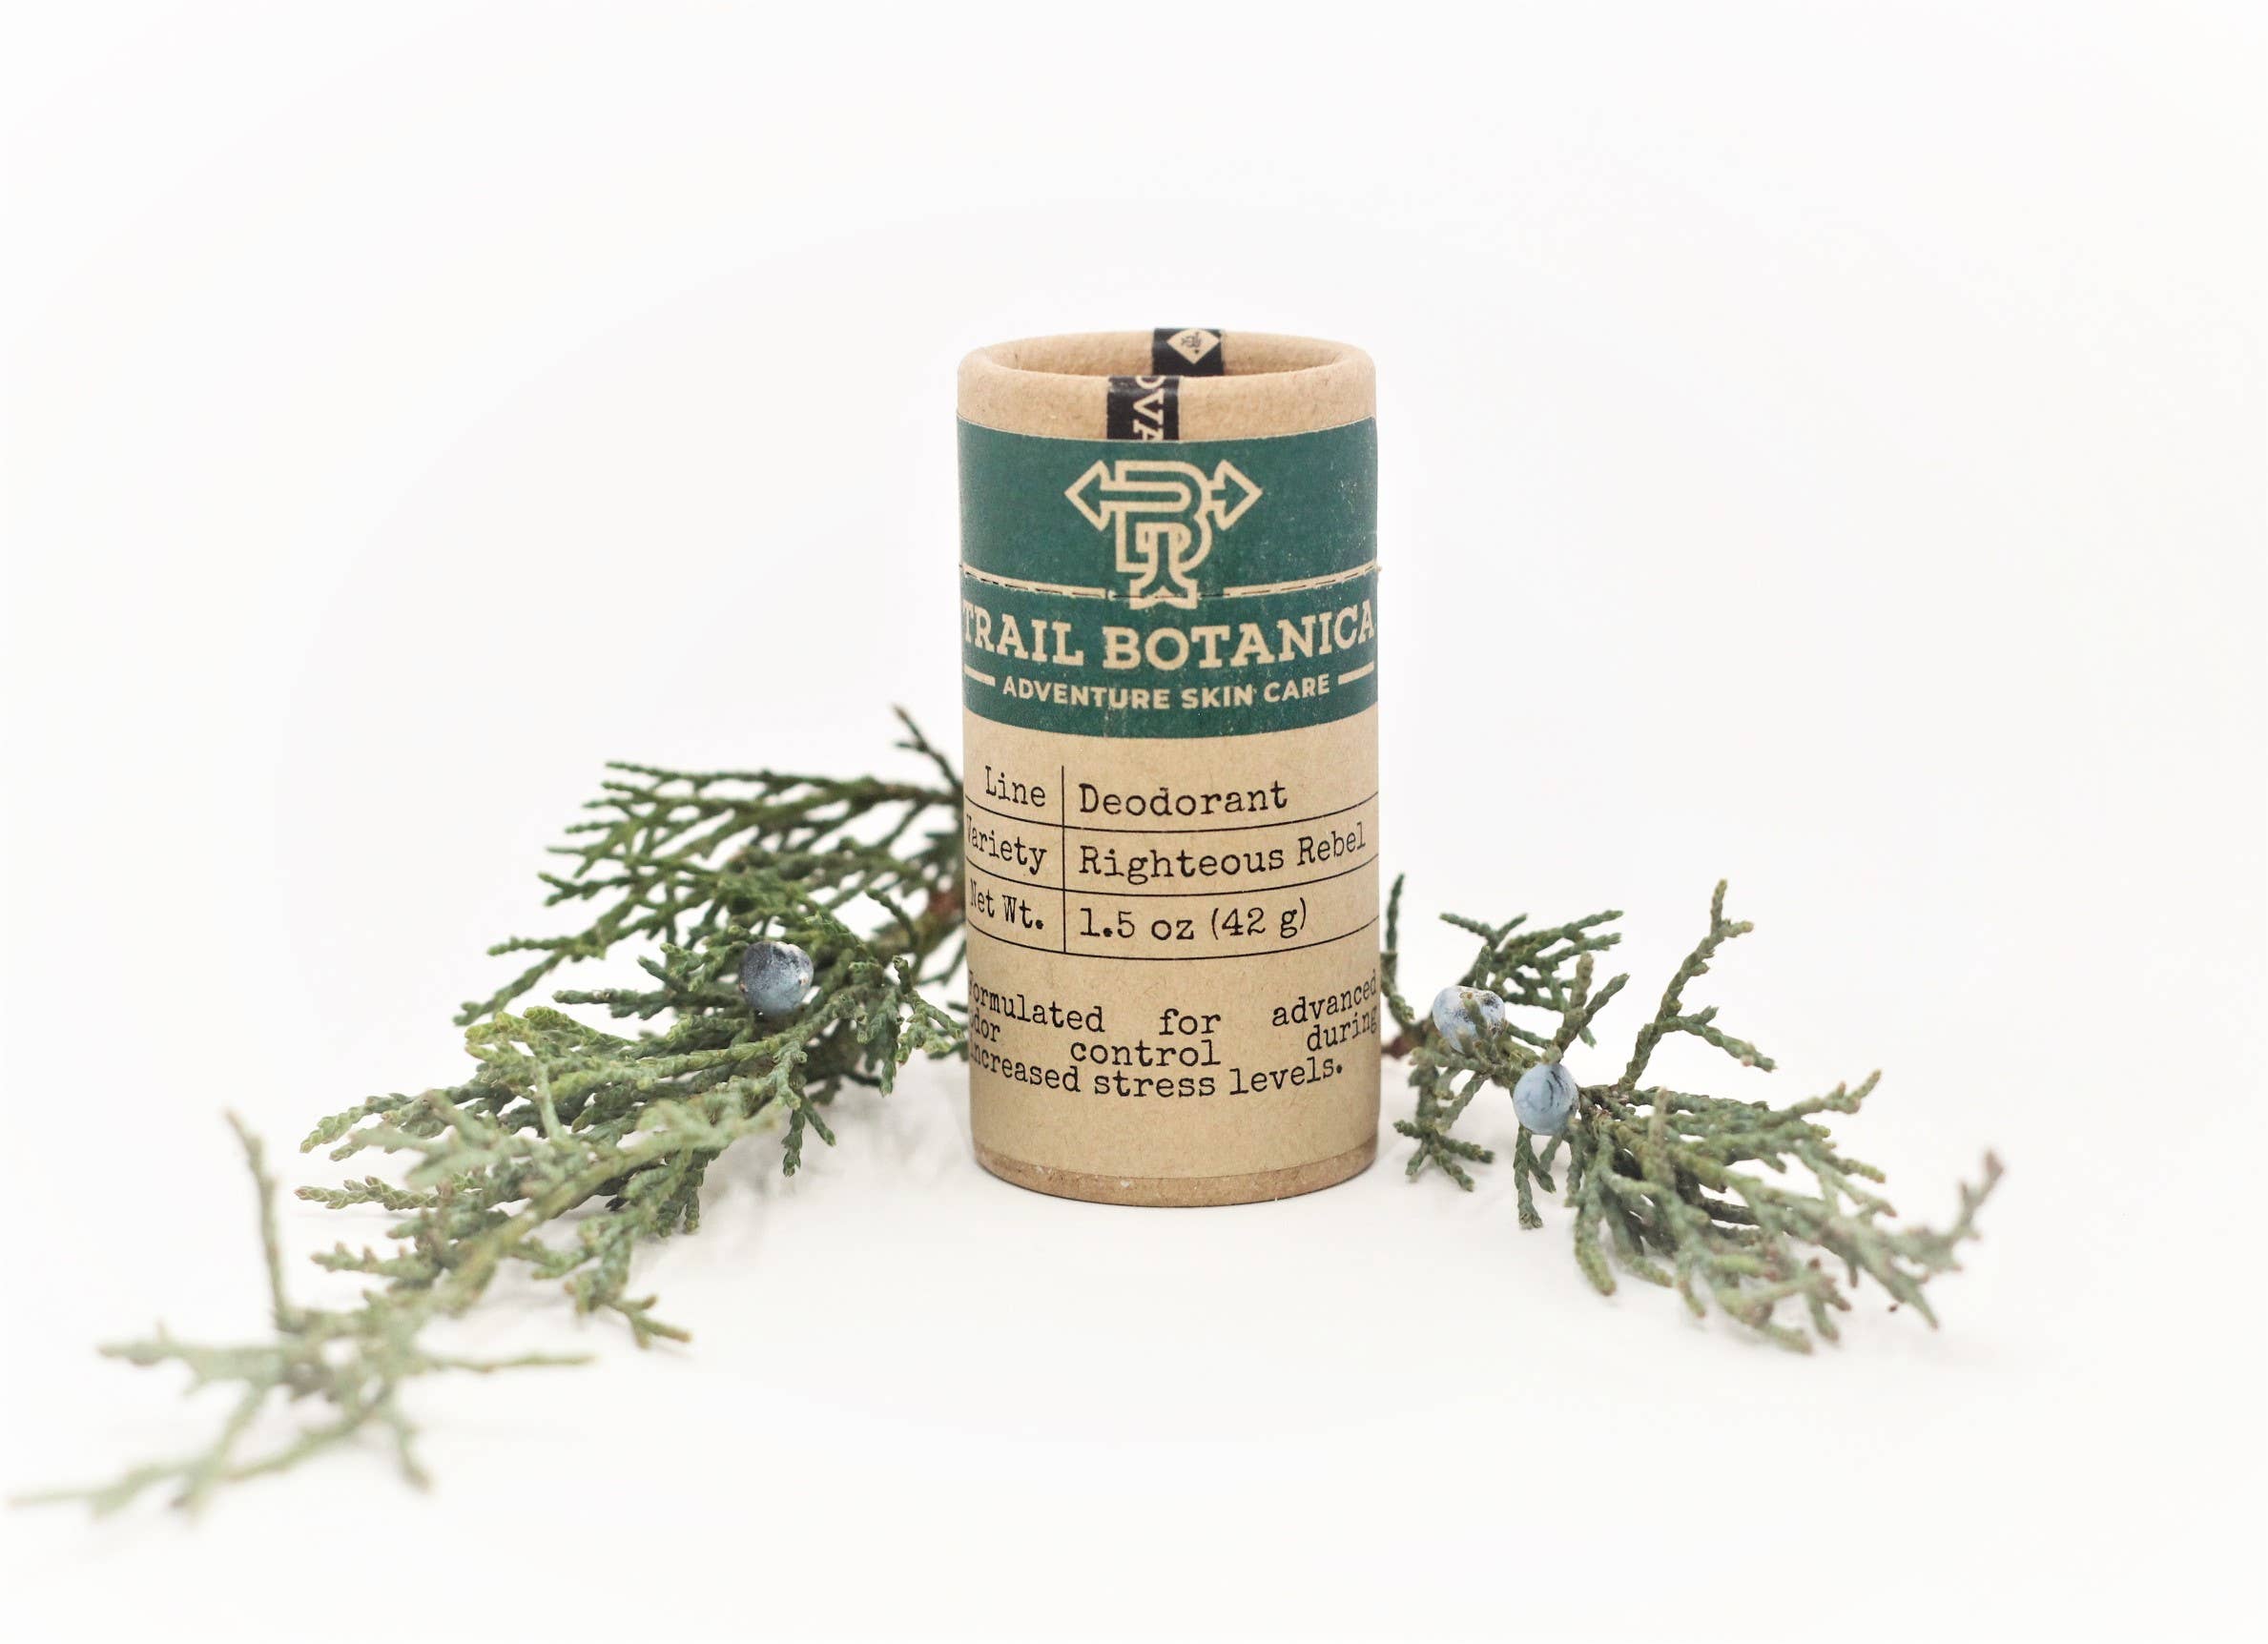 Trail Botanica Righteous Rebel Advanced Deodorant